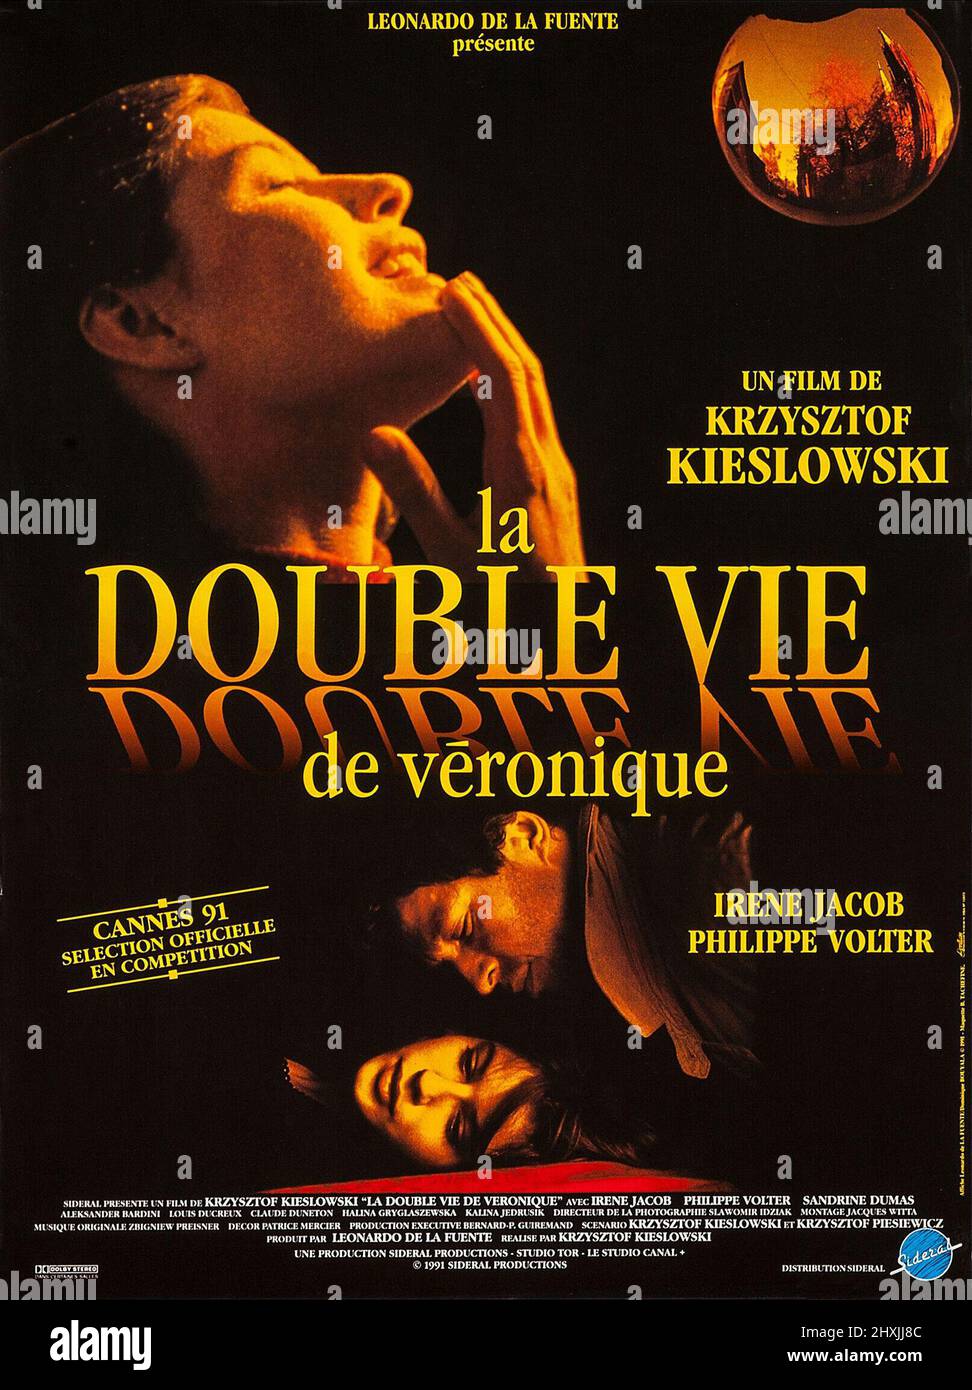 THE DOUBLE LIFE OF VERONIQUE (1991) -Original title: LA DOUBLE VIE DE VERONIQUE-, directed by KRZYSZTOF KIESLOWSKI. Credit: Sidéral Productions/Canal+/Norsk FilmZespol Filmowy 'Tor'/ Album Stock Photo